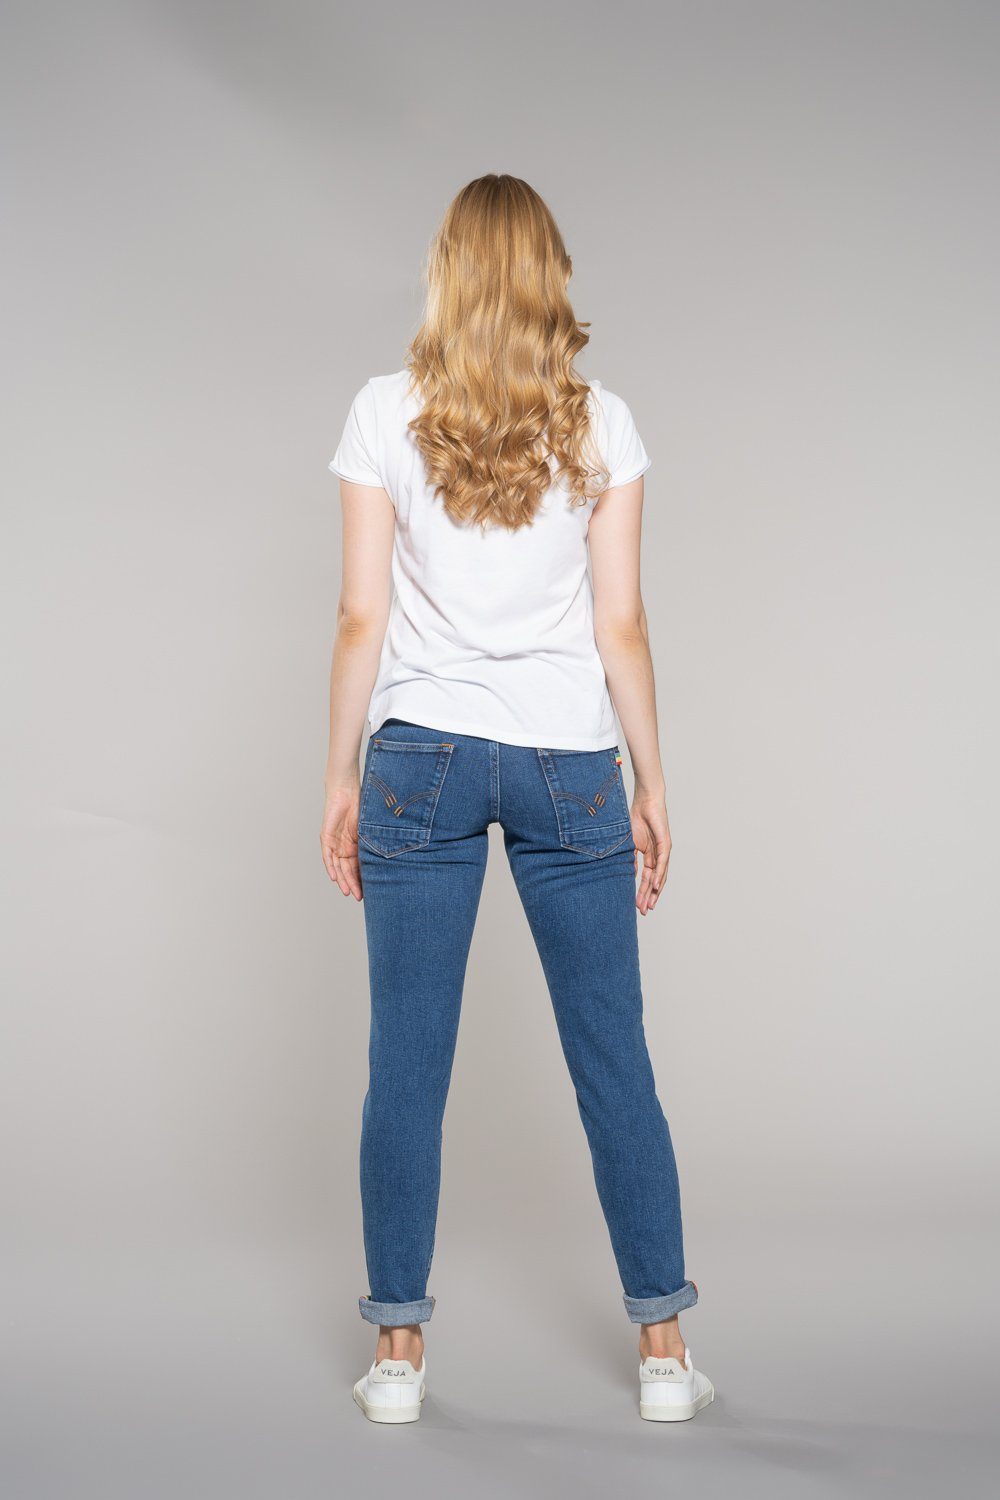 Feuervogl Slim-fit-Jeans fv-West:minster, Blue Waist, Slim Unisex, Slim Medium 5-Pocket-Style, Waist Fashion Fit, Unisex Fit, Medium